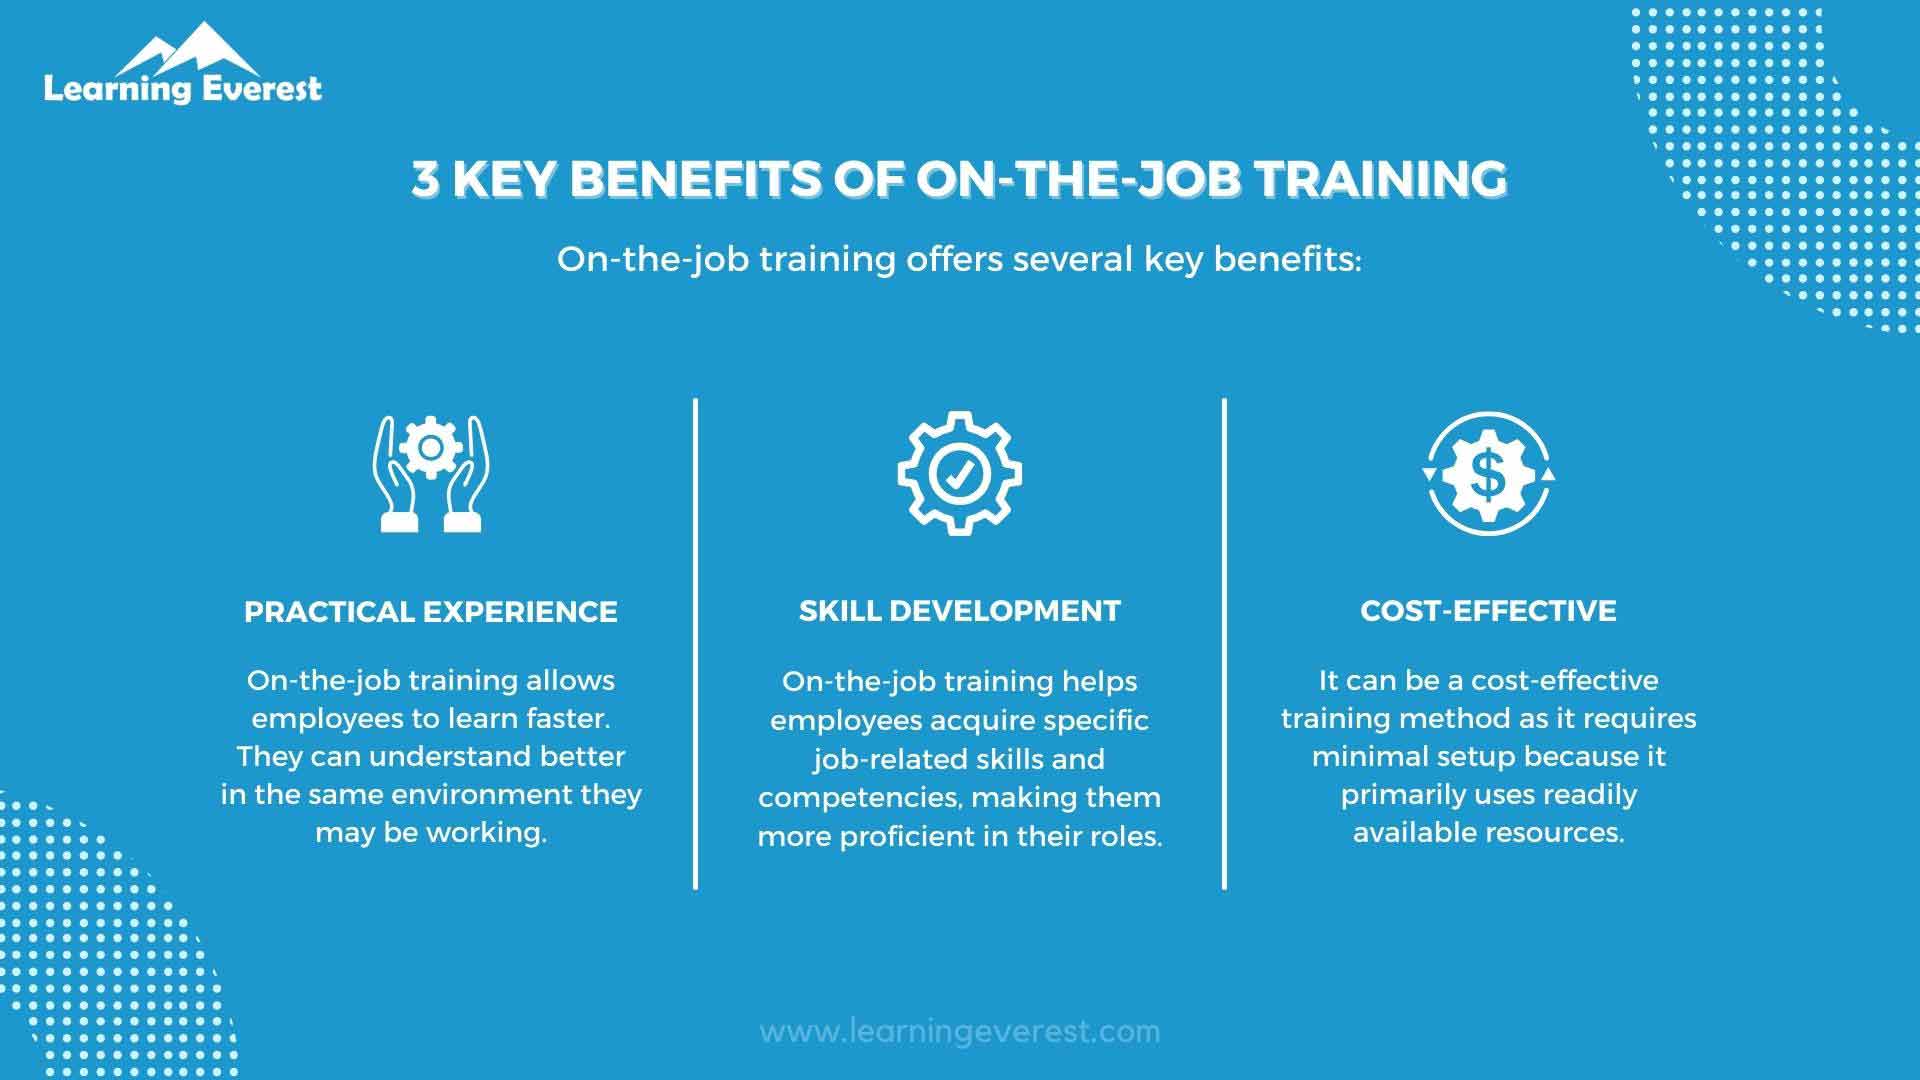 Benefits of On-the-job training